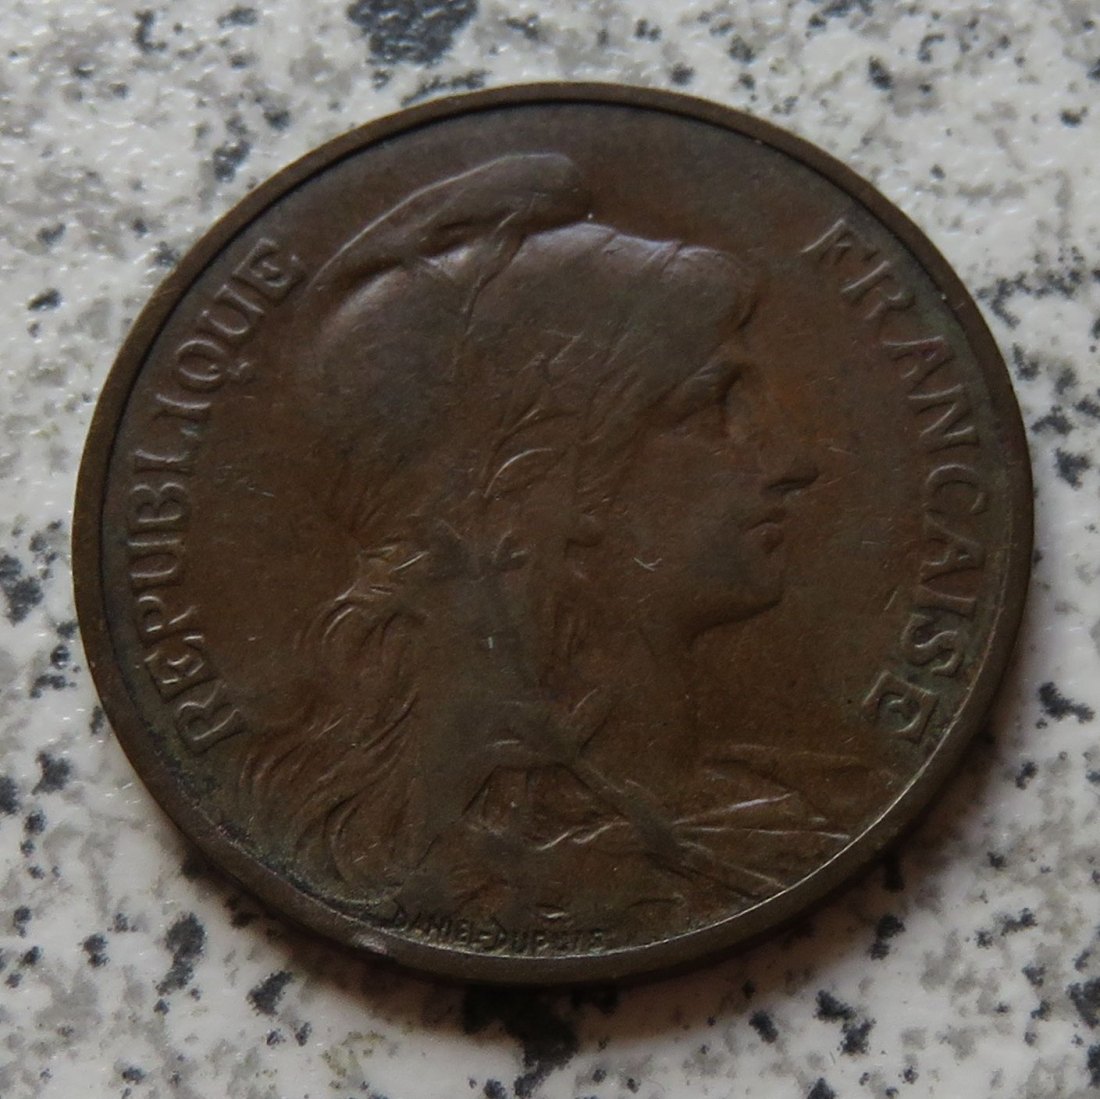  Frankreich 5 Centimes 1902   